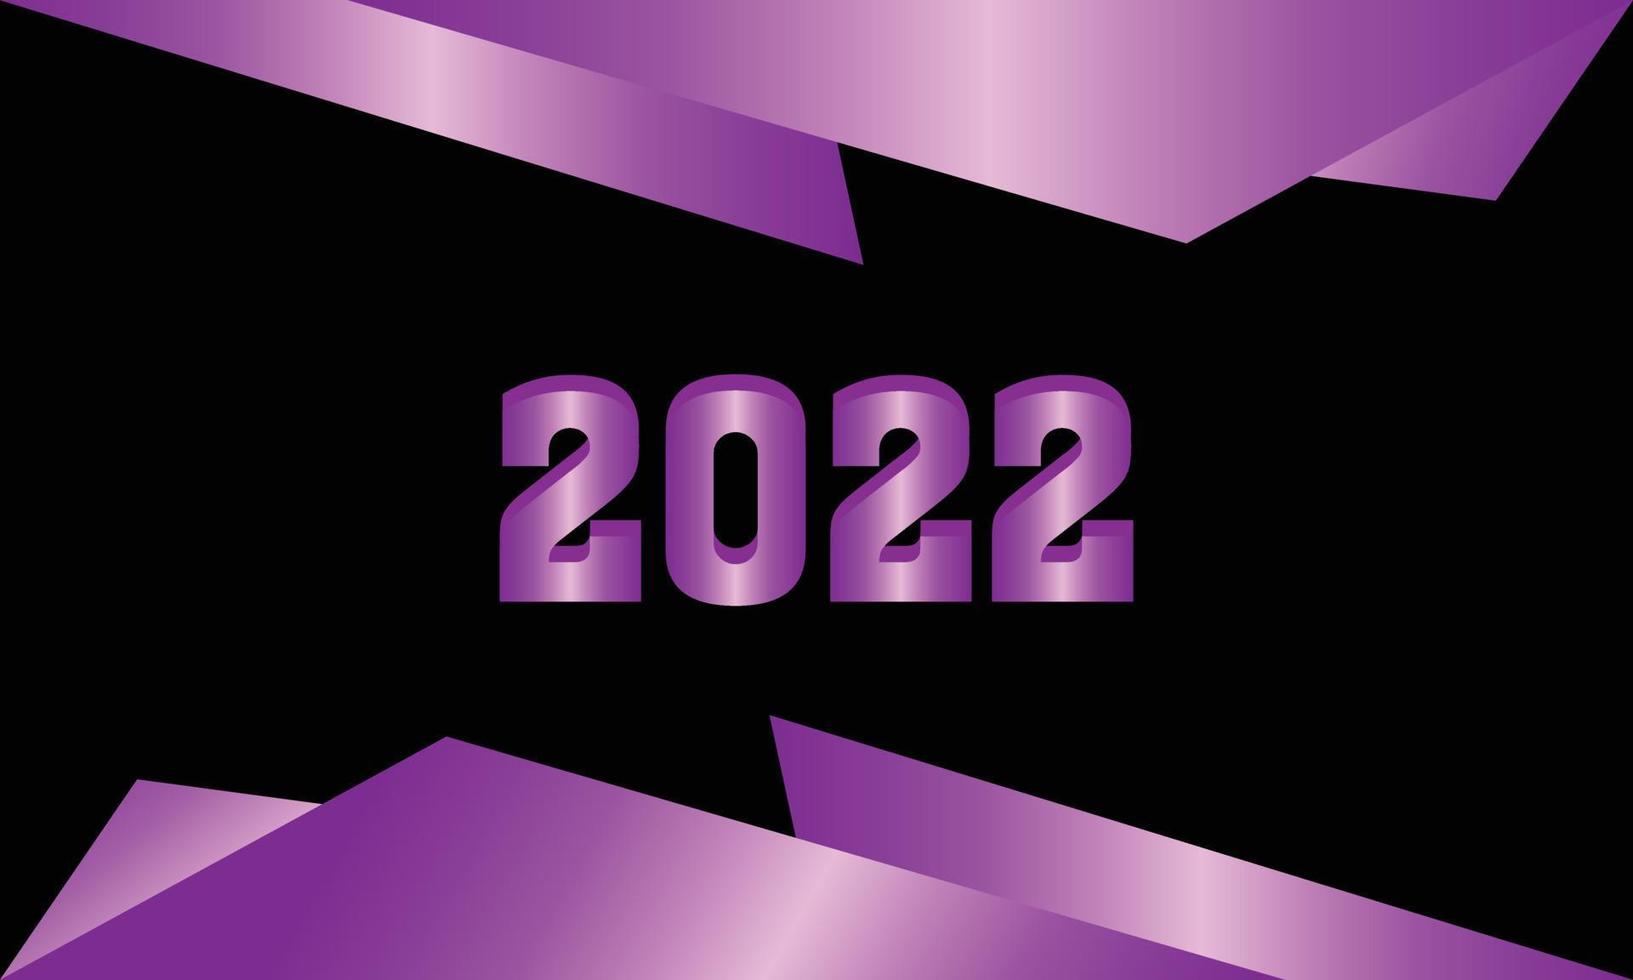 2022 Hintergrunddesign-Vektorvorlage vektor